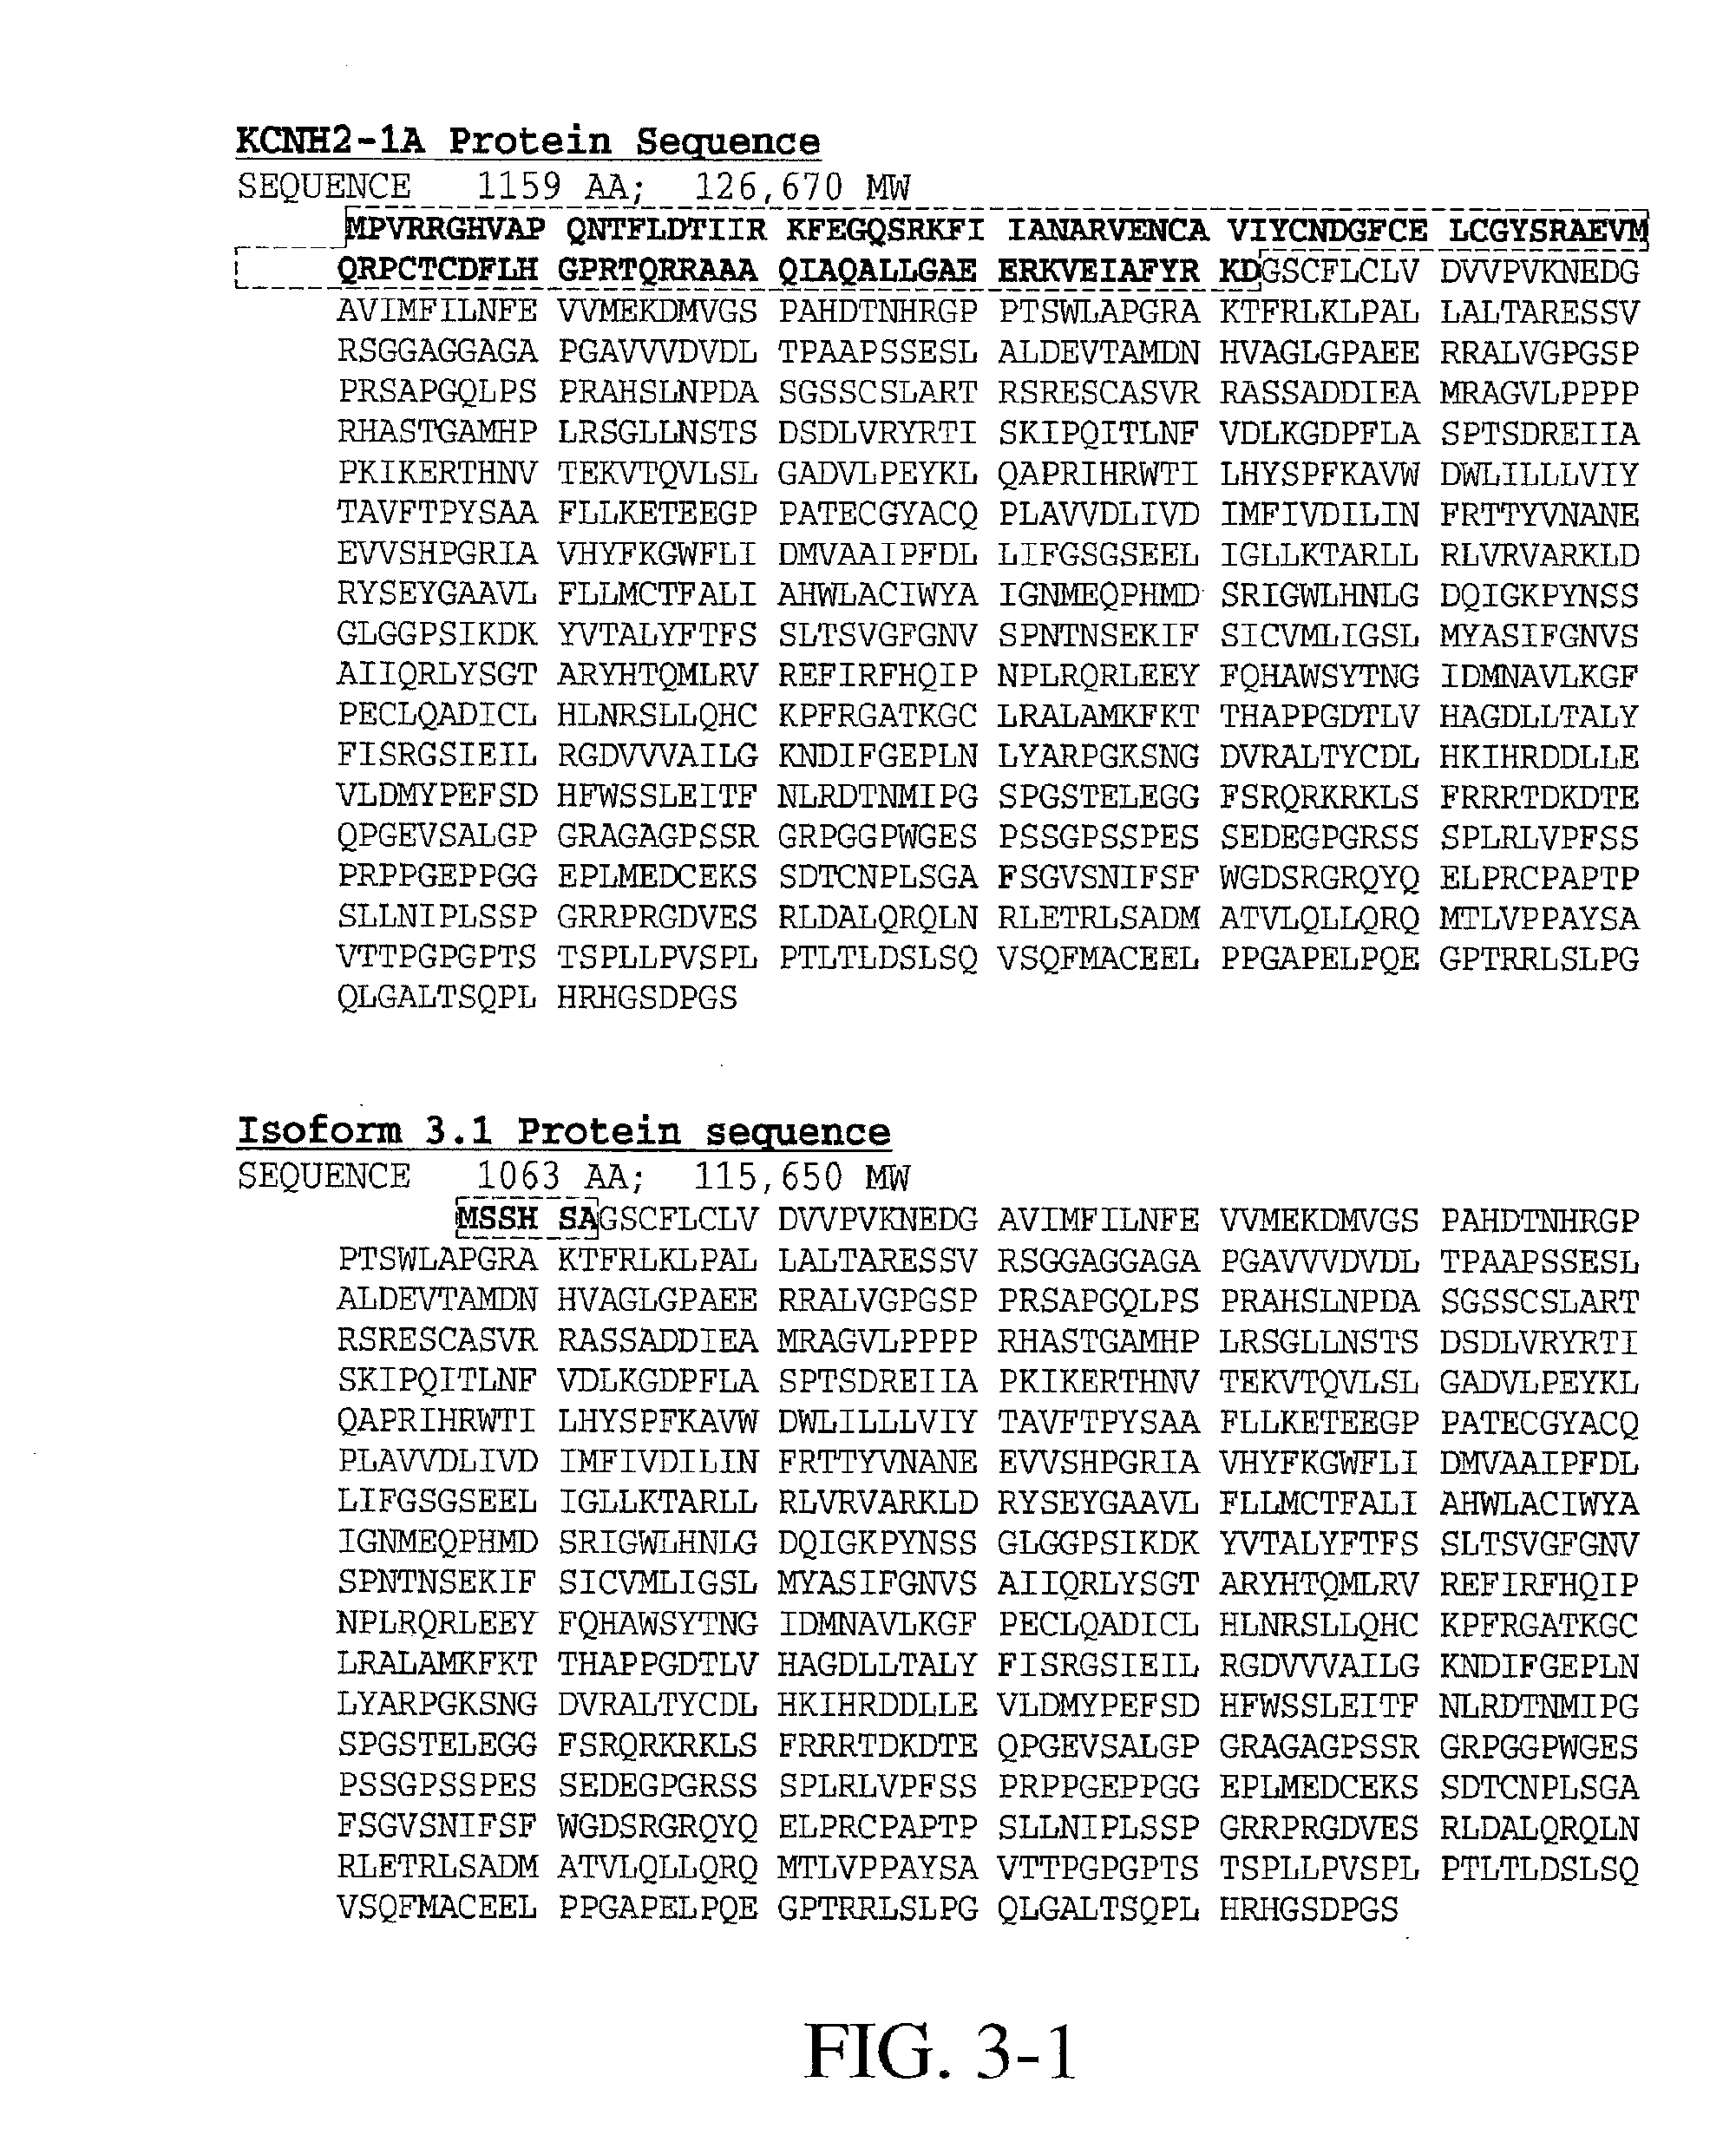 Schizophrenia-related isoform of kcnh2 and development of antipsychotic drugs